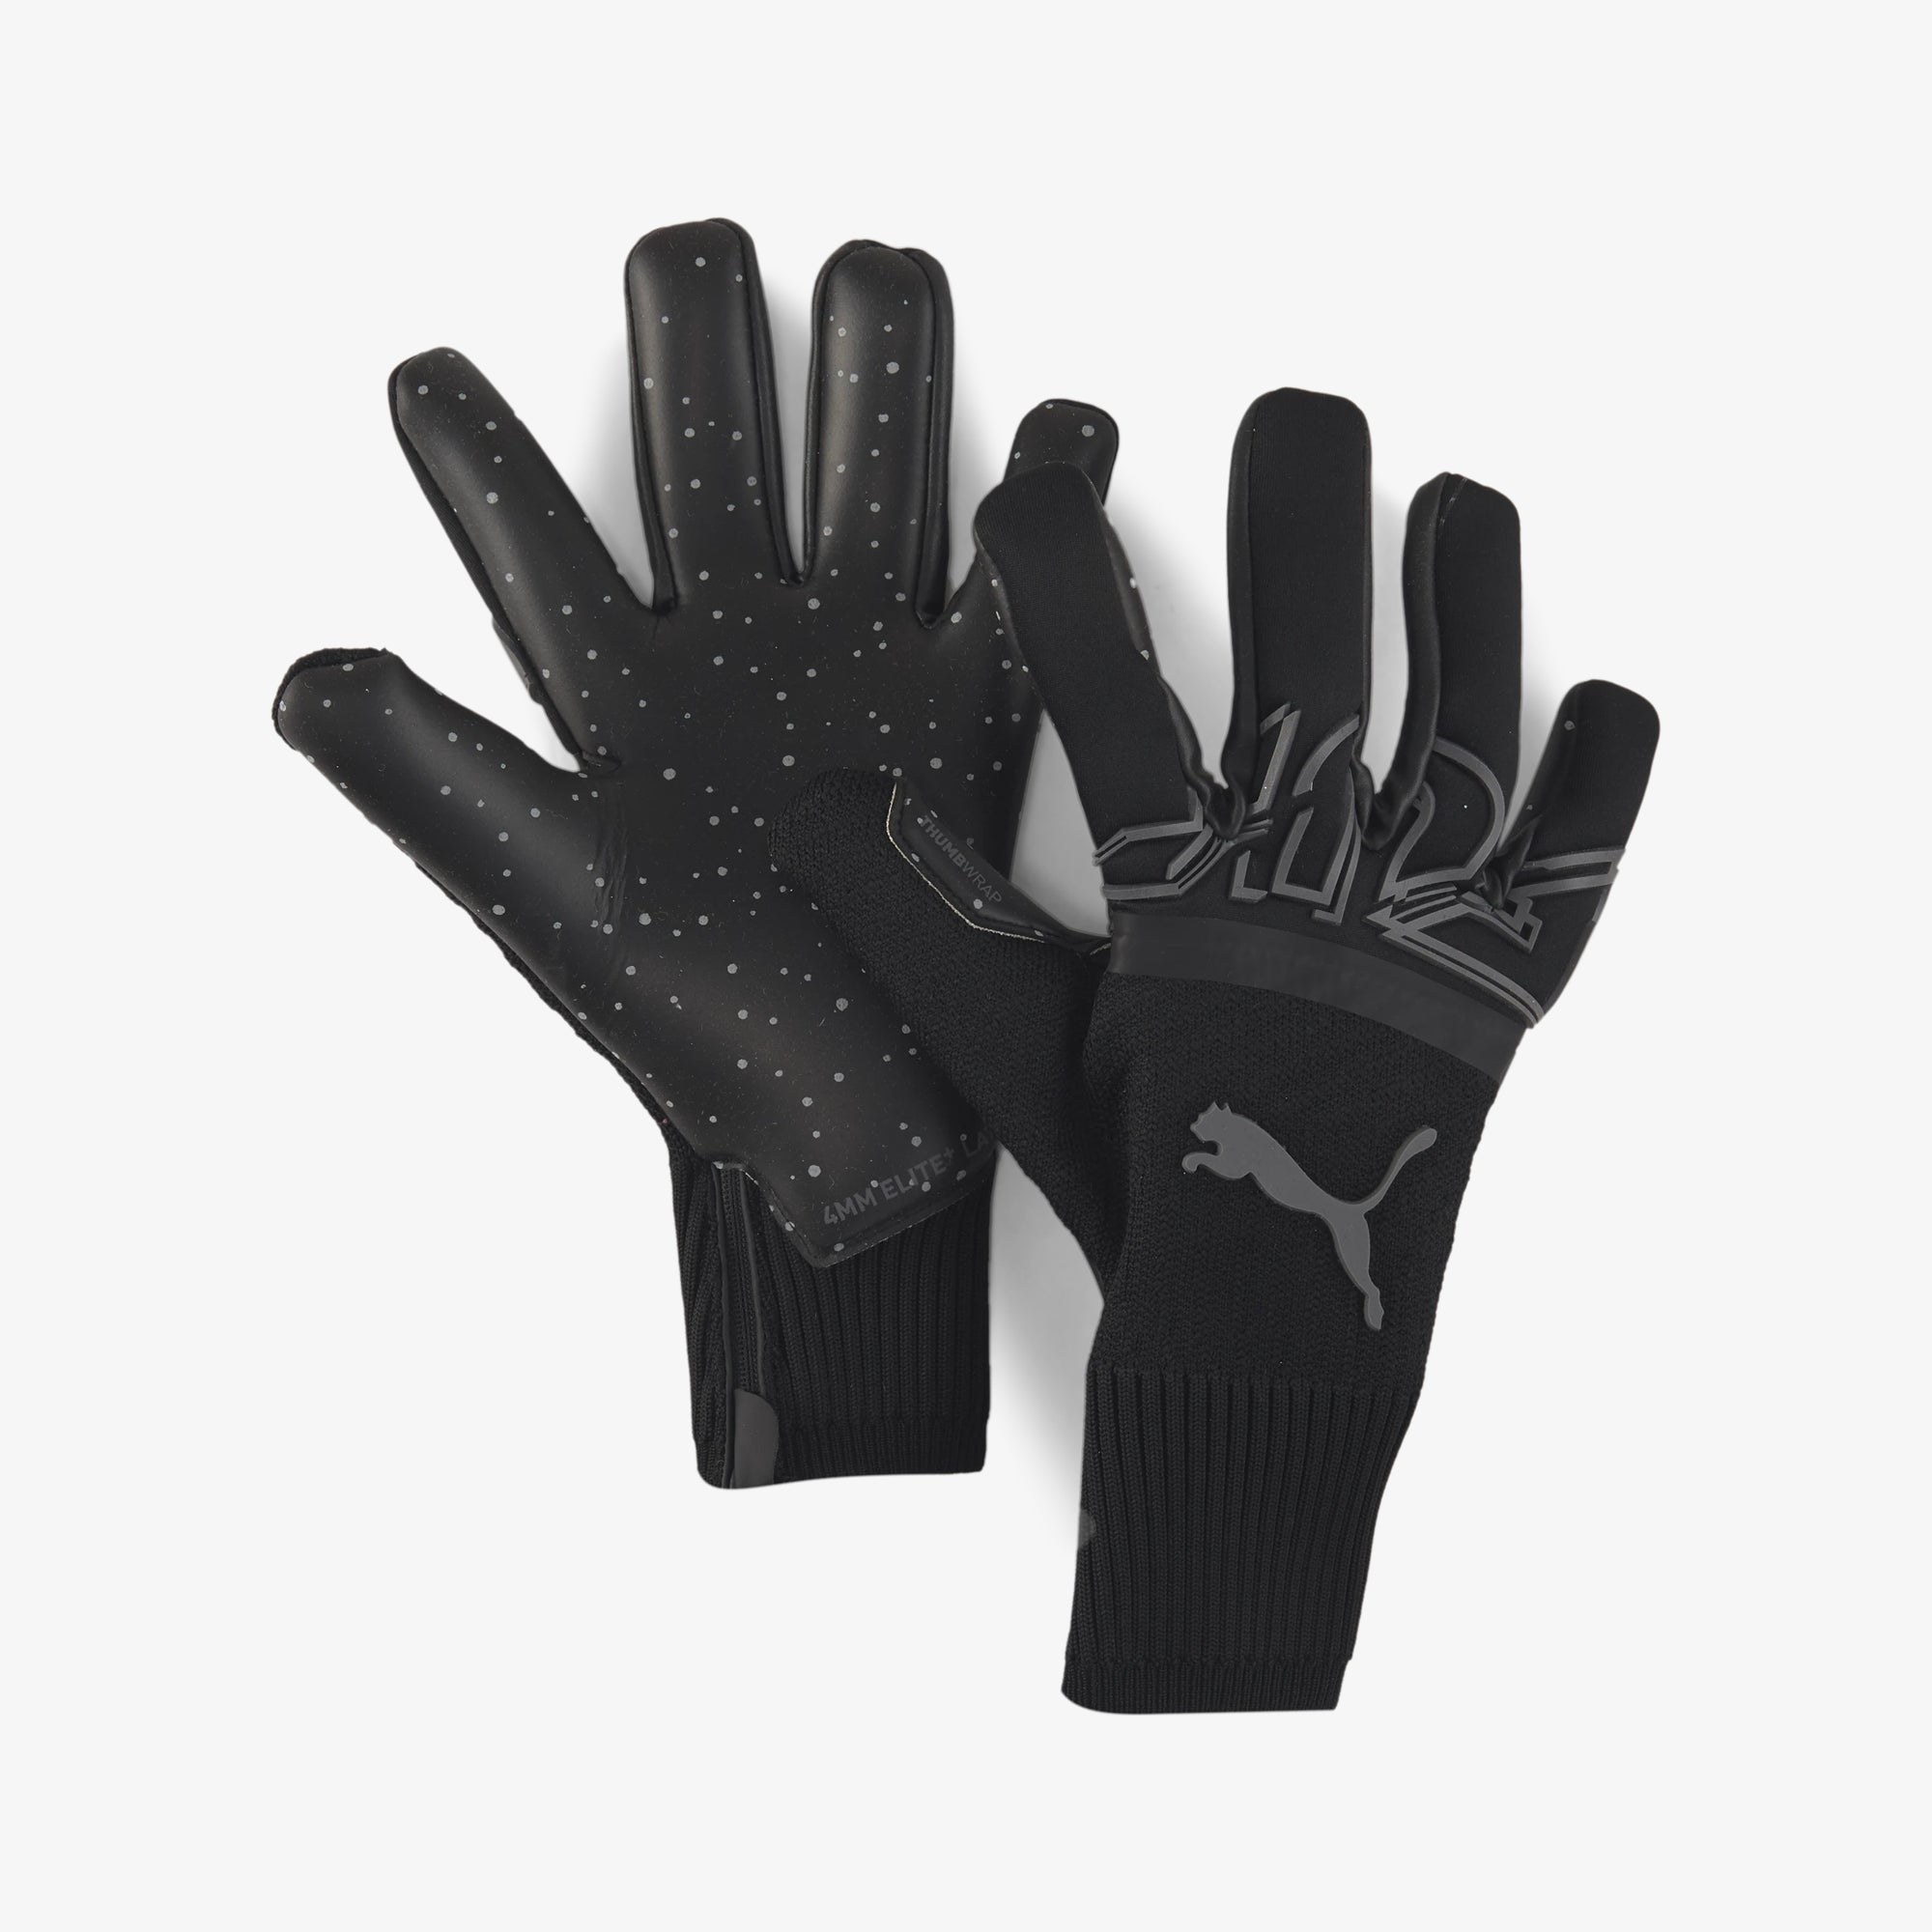 FUTURE Z Grip 1 Hybrid Goalkeeper Gloves